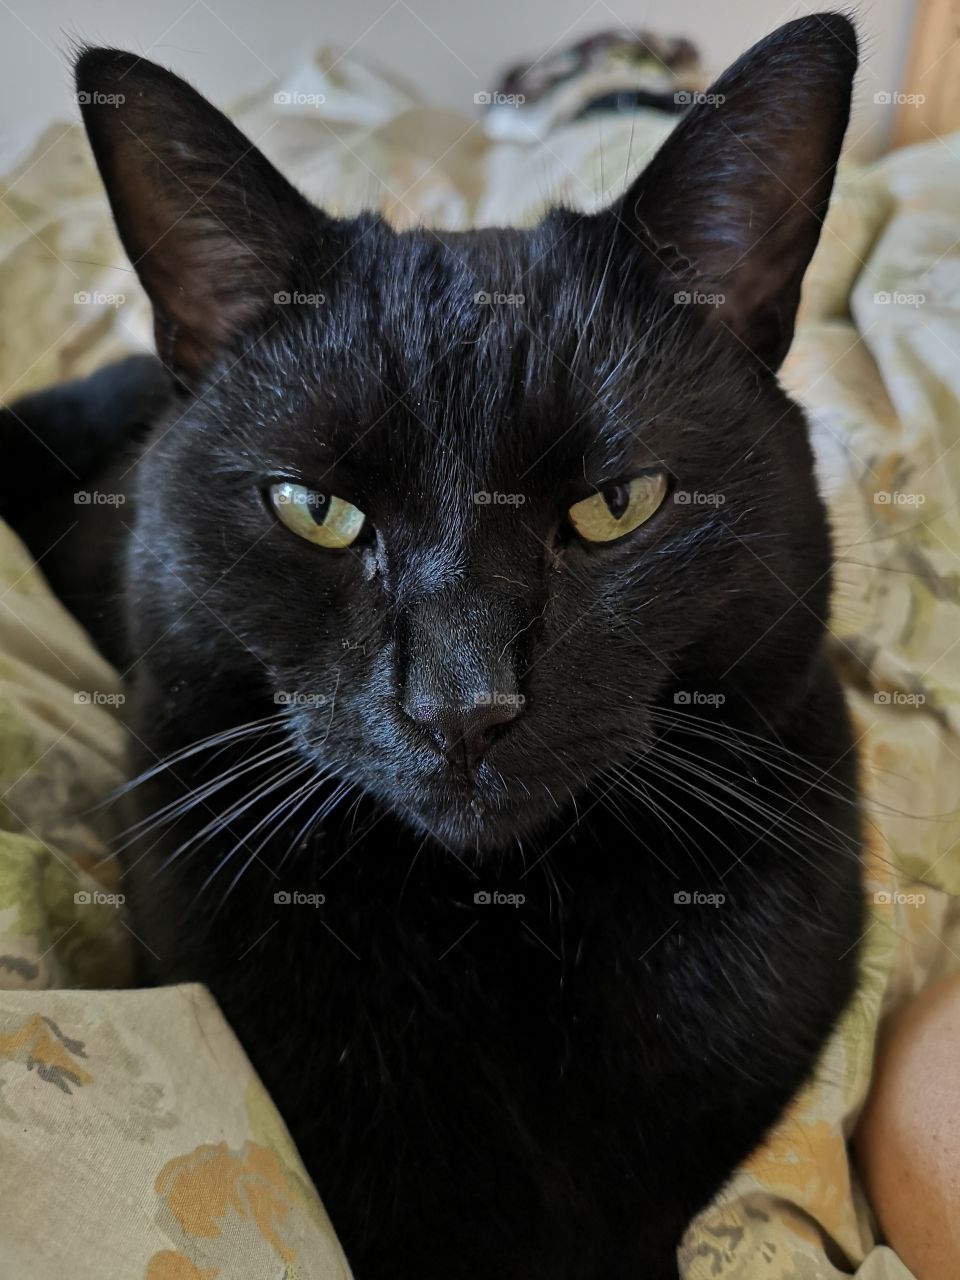 Rupert the black cat